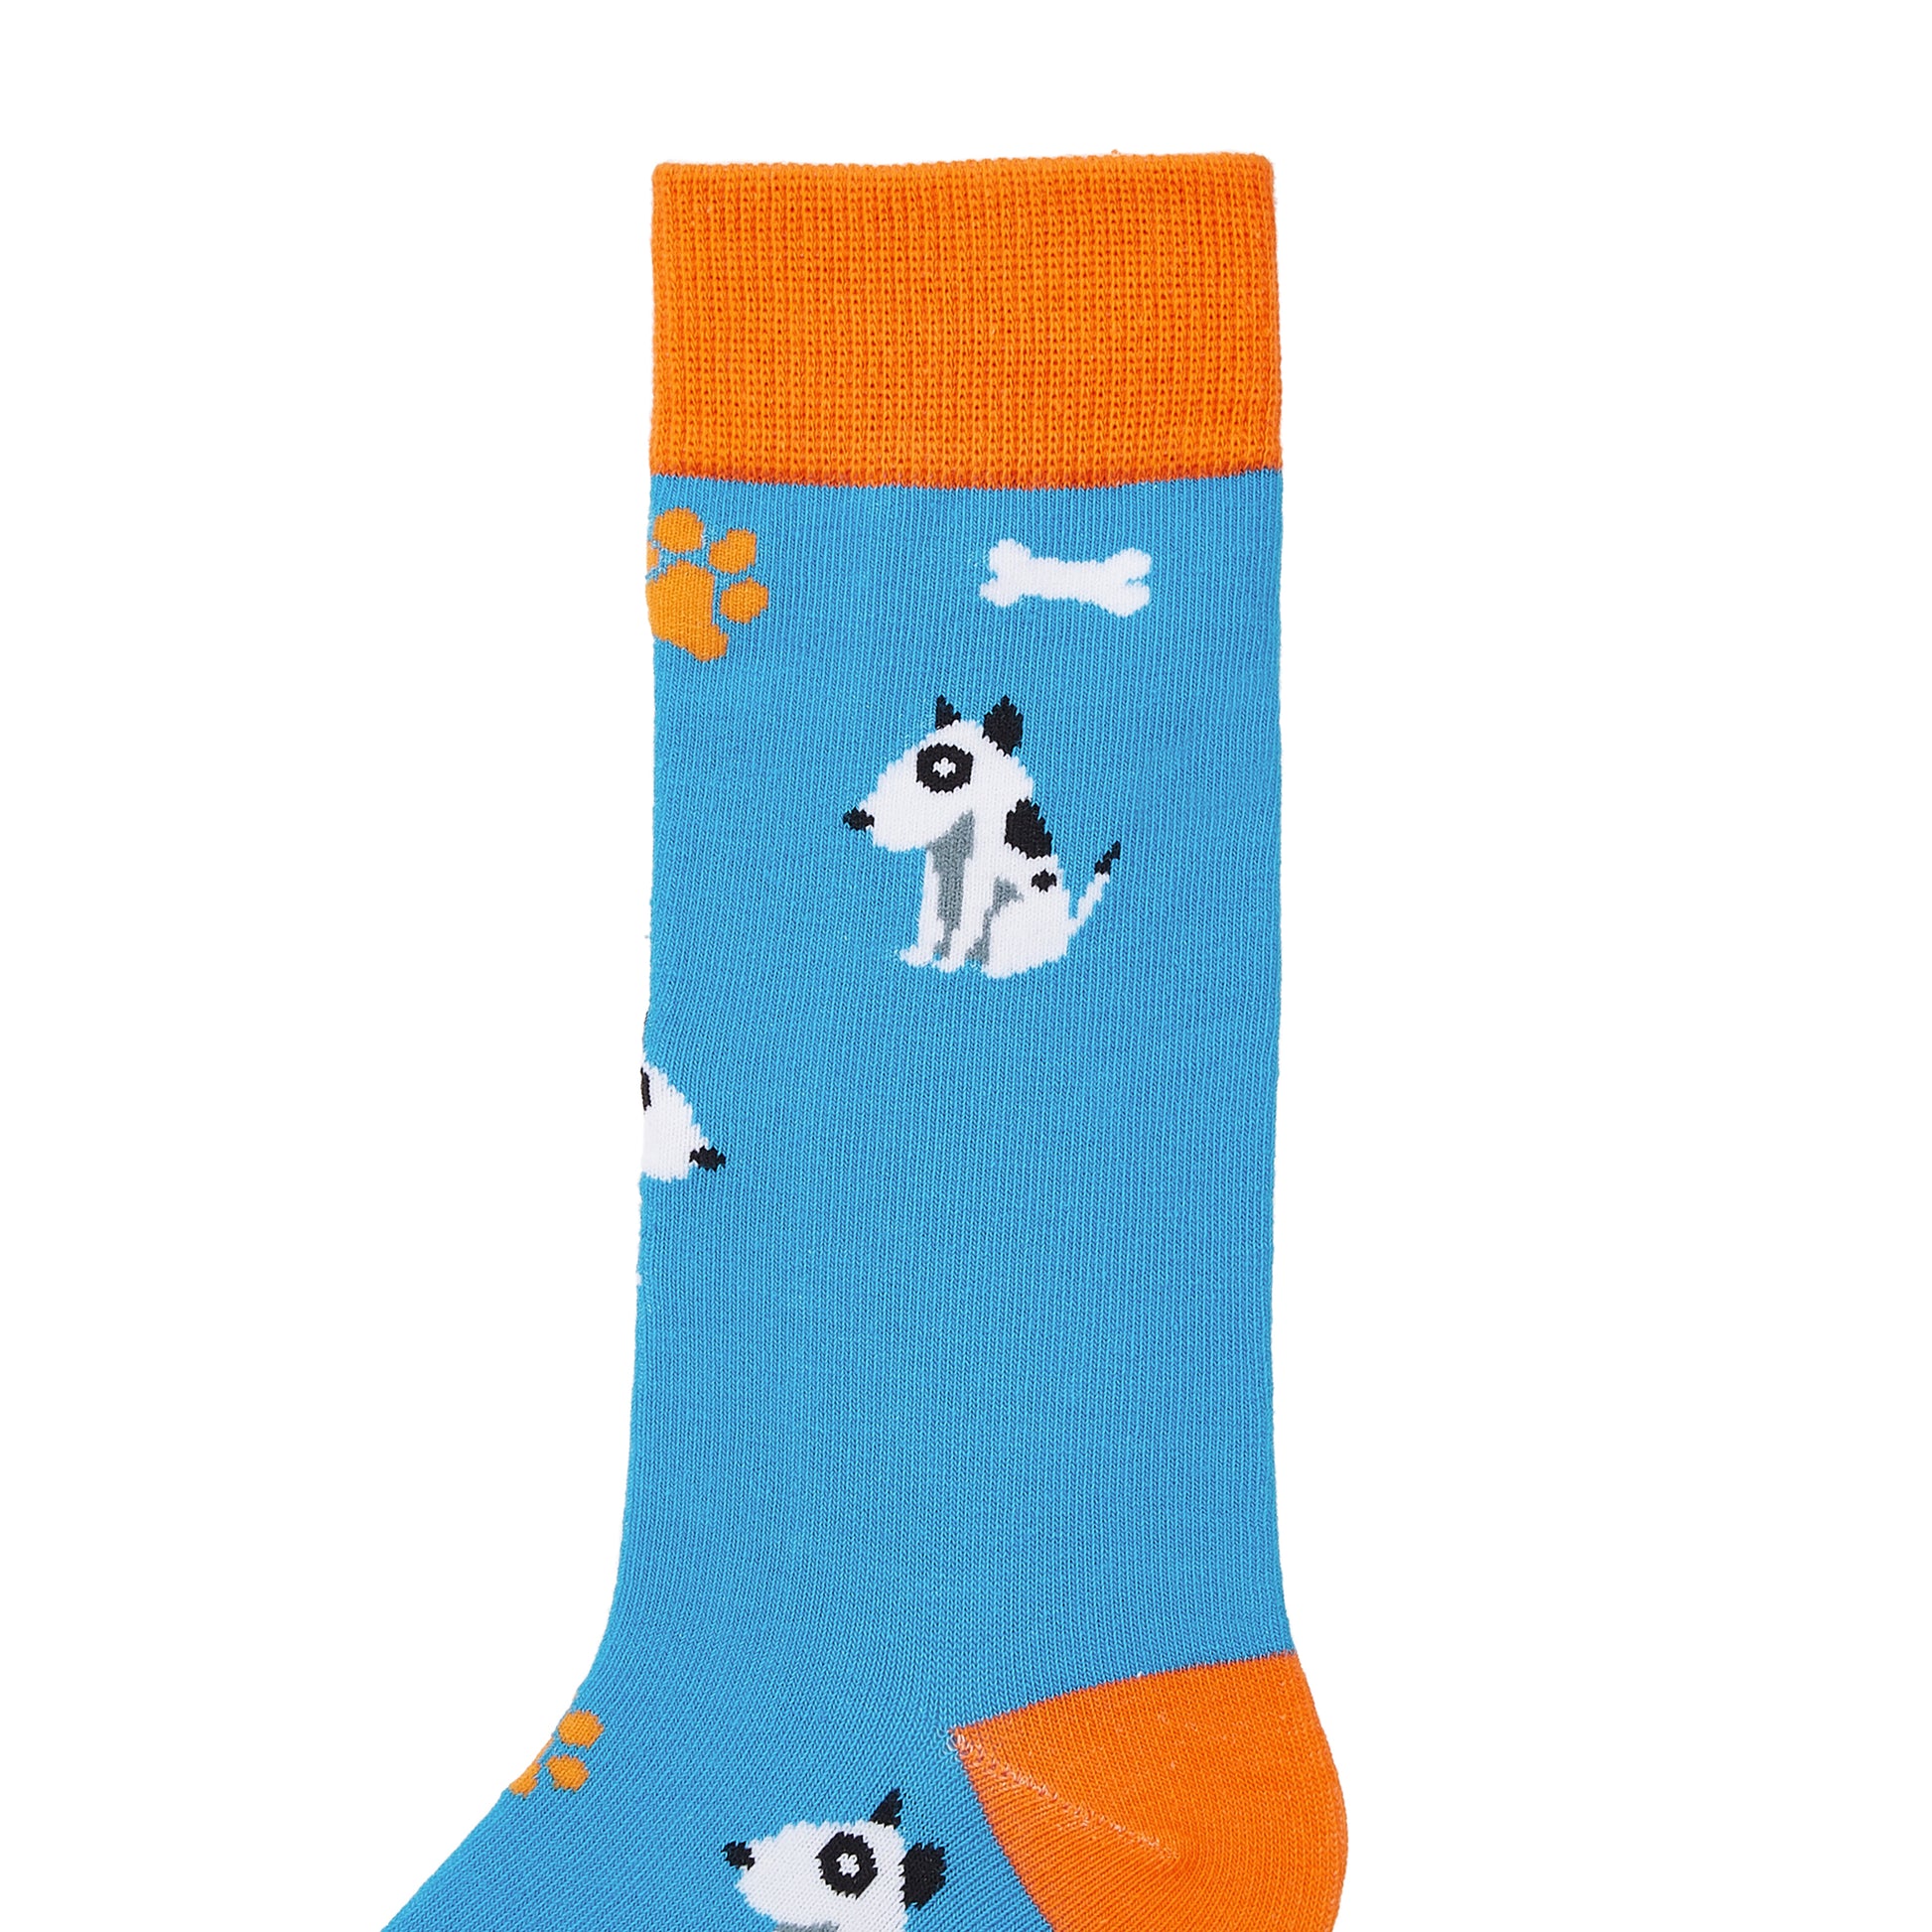 Jack Russell Terrier Printed Crew Length Socks - IDENTITY Apparel Shop